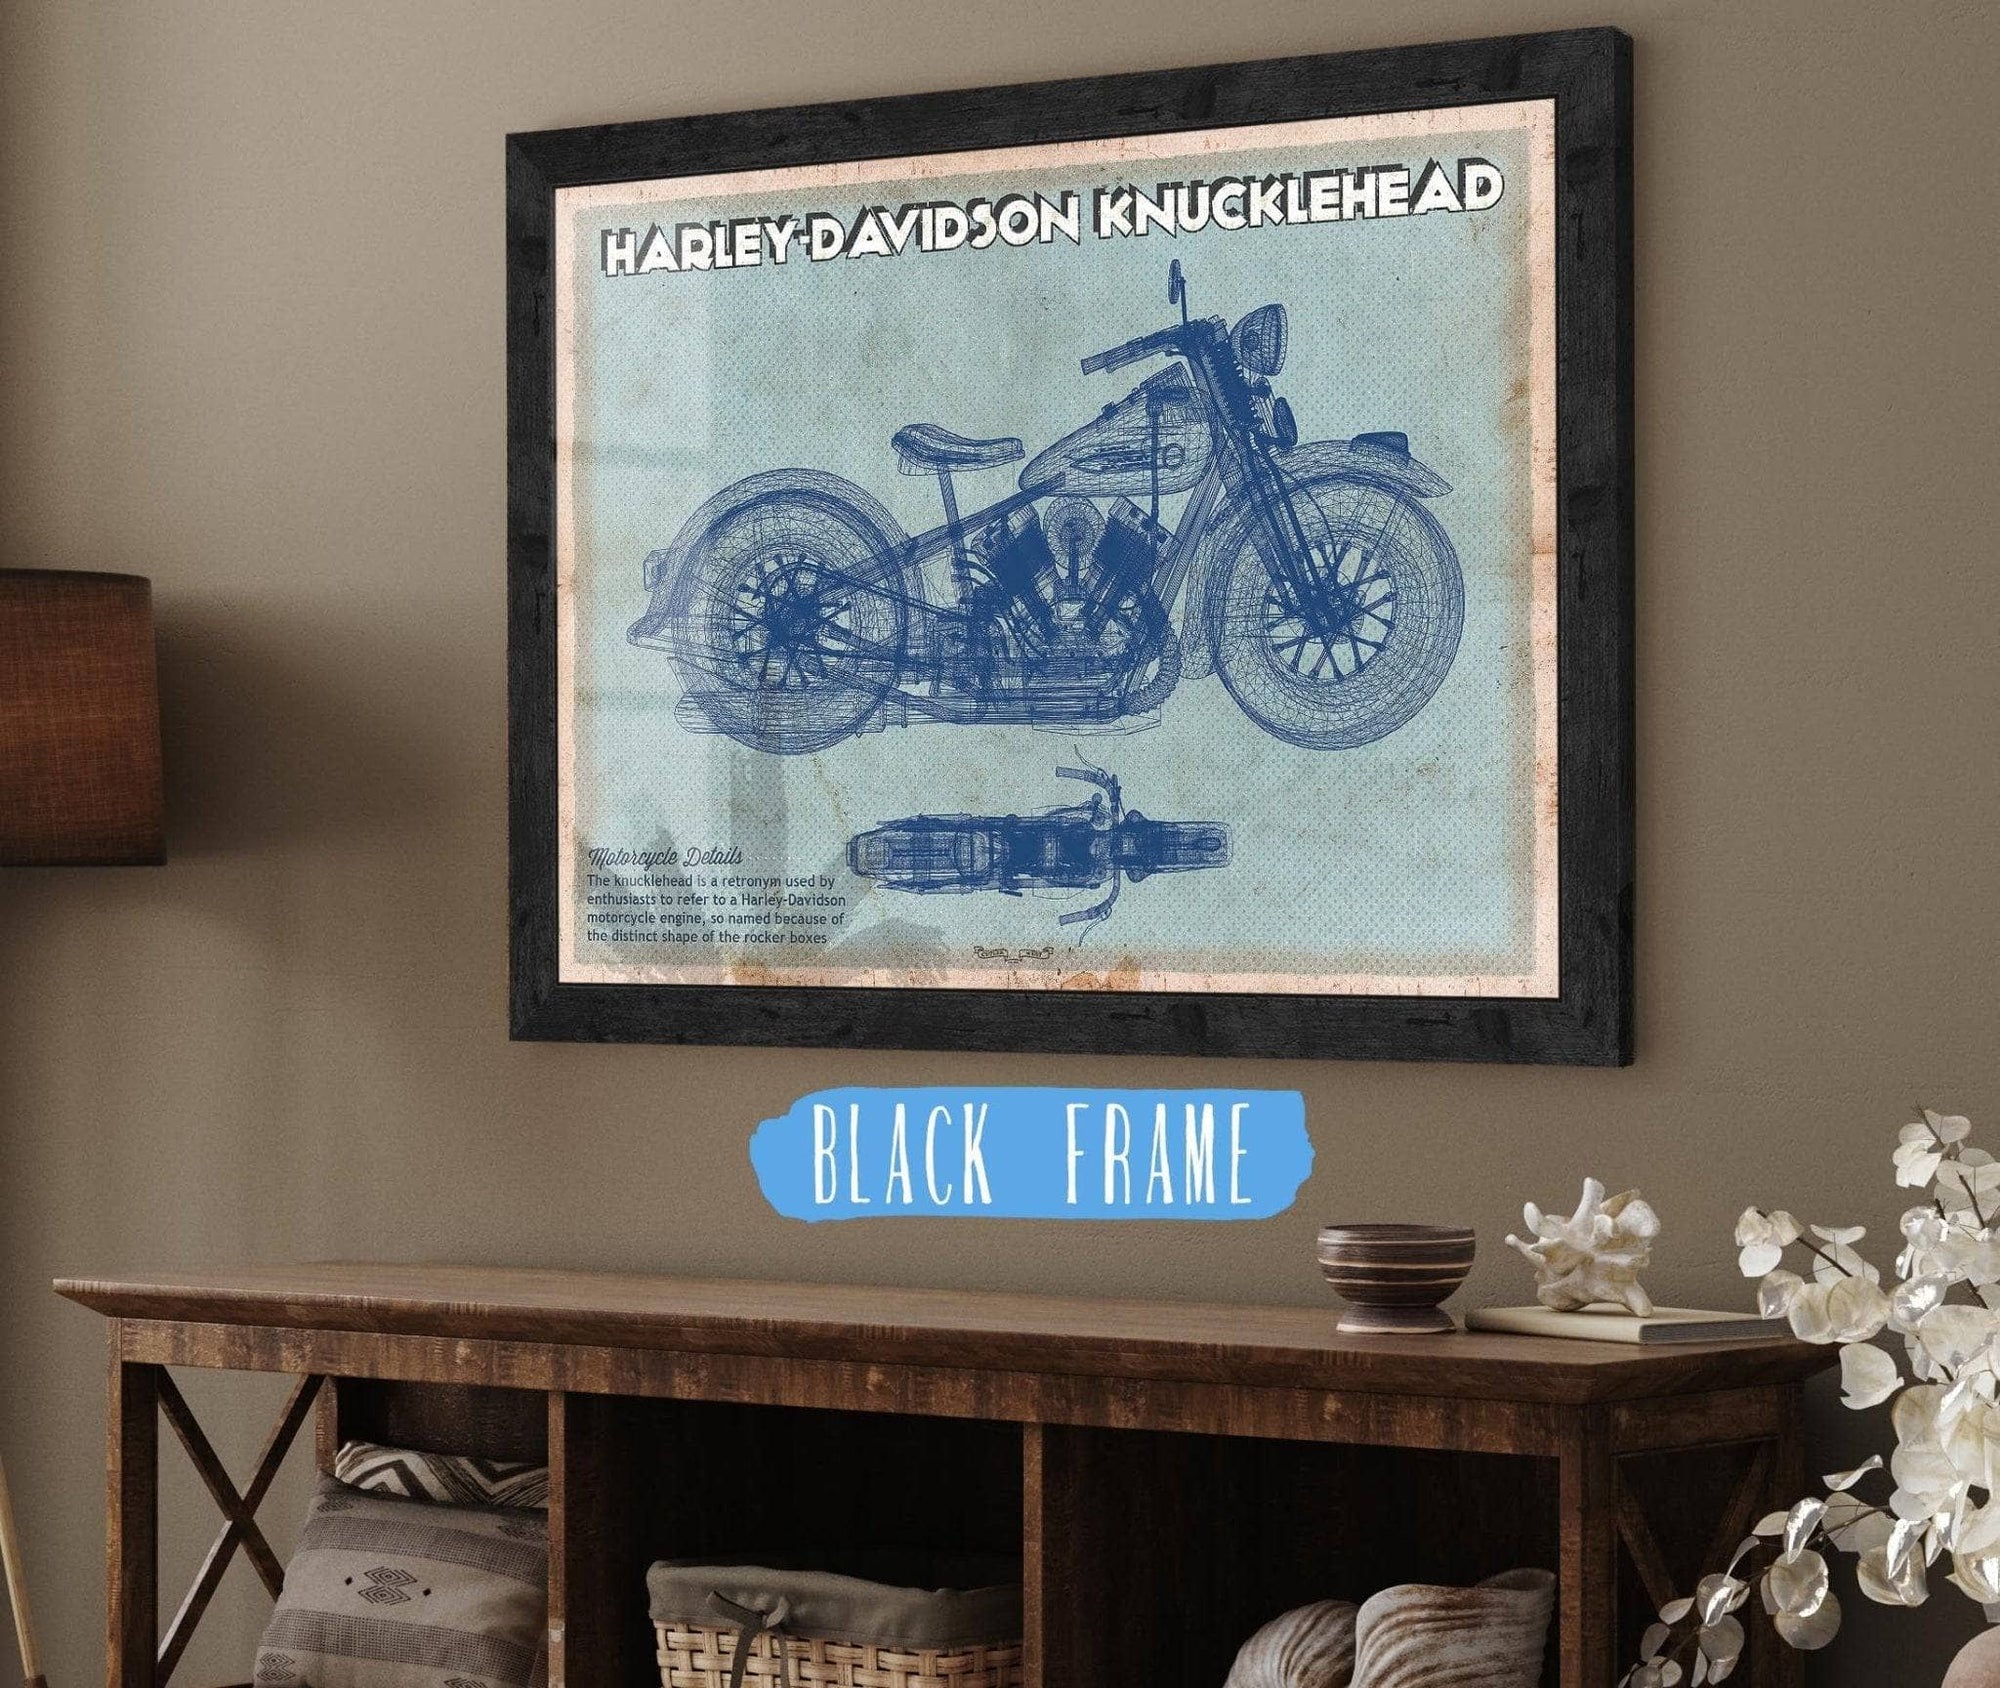 Cutler West 14" x 11" / Black Frame Harley-Davidson Knucklehead Blueprint Motorcycle Patent Print 835000030_63983